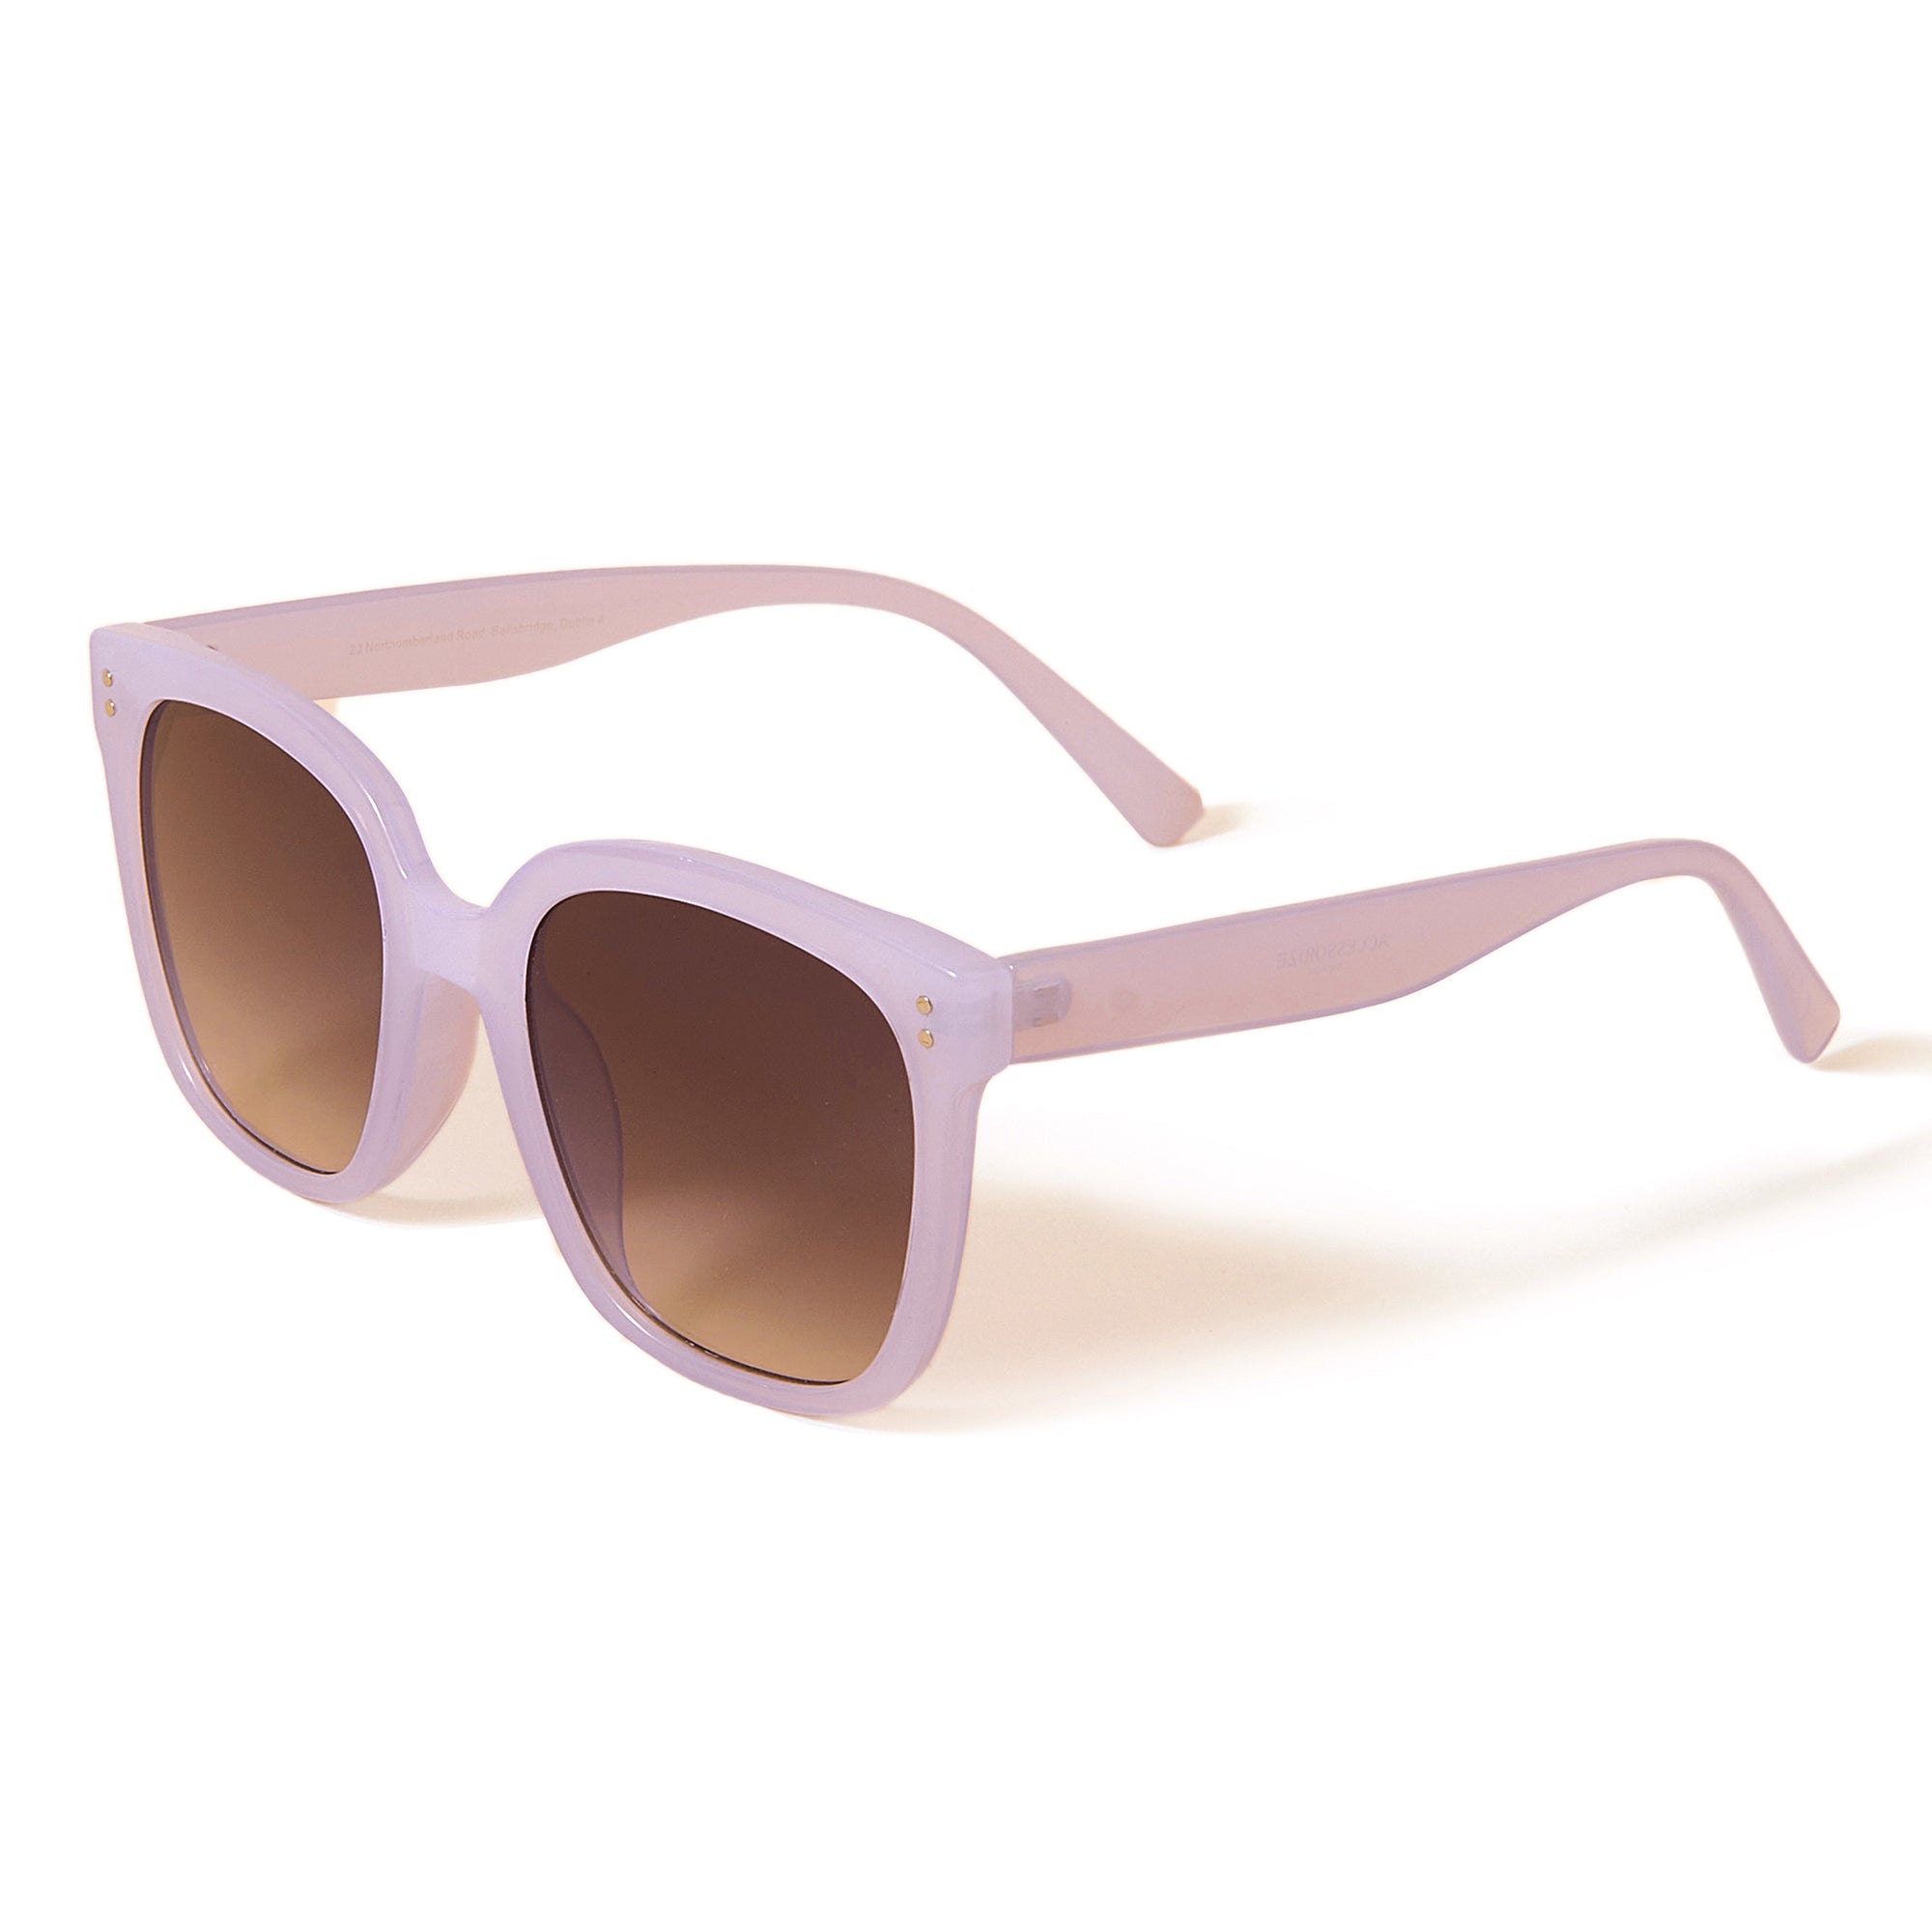 Accessorize London Women's Light Pink Coloured Oversized Wayfarer Sunglasses